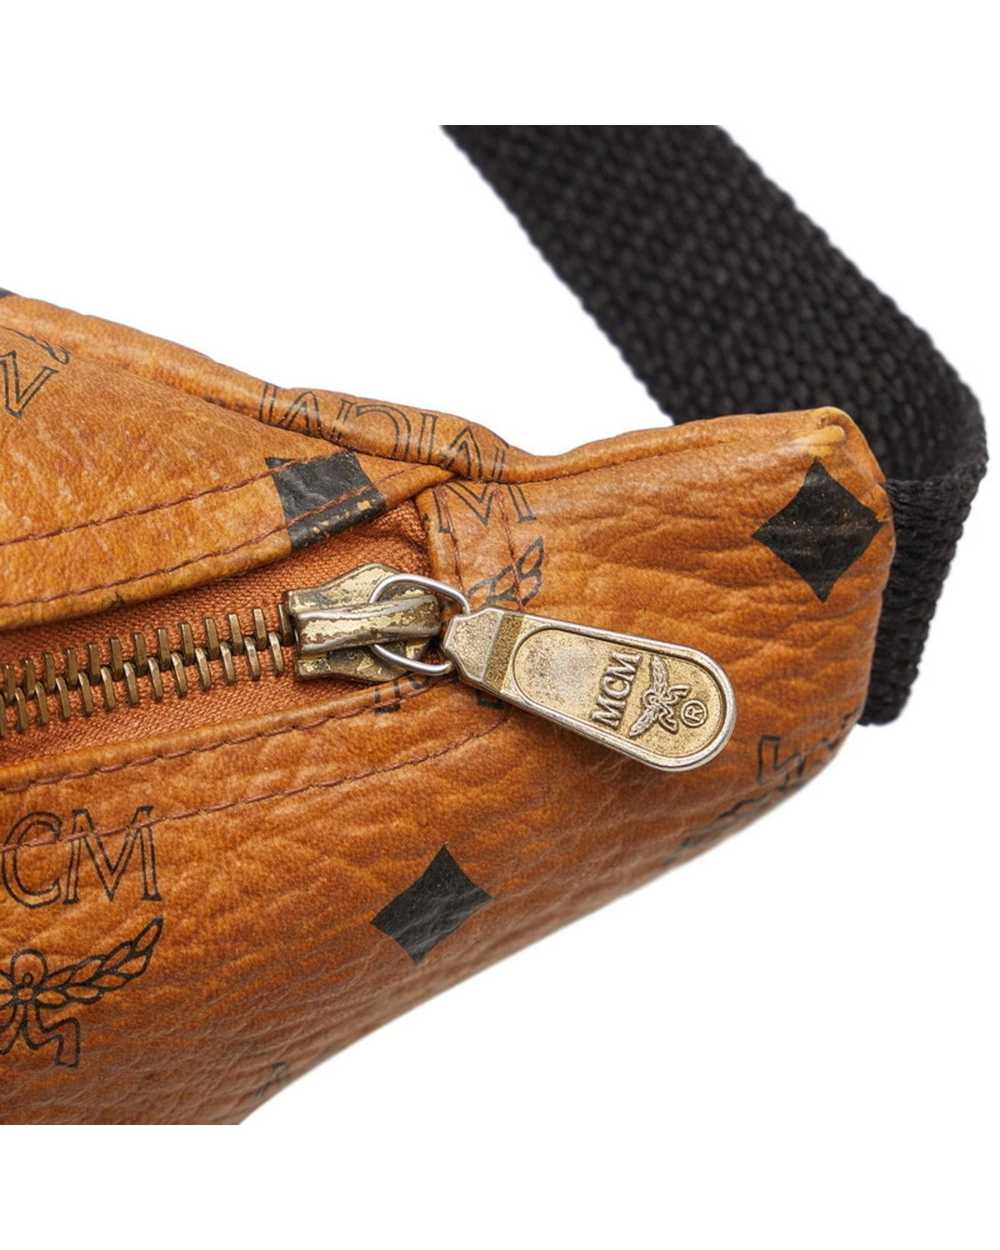 MCM Brown Leather Fanny Pack/Sling Bag - image 5